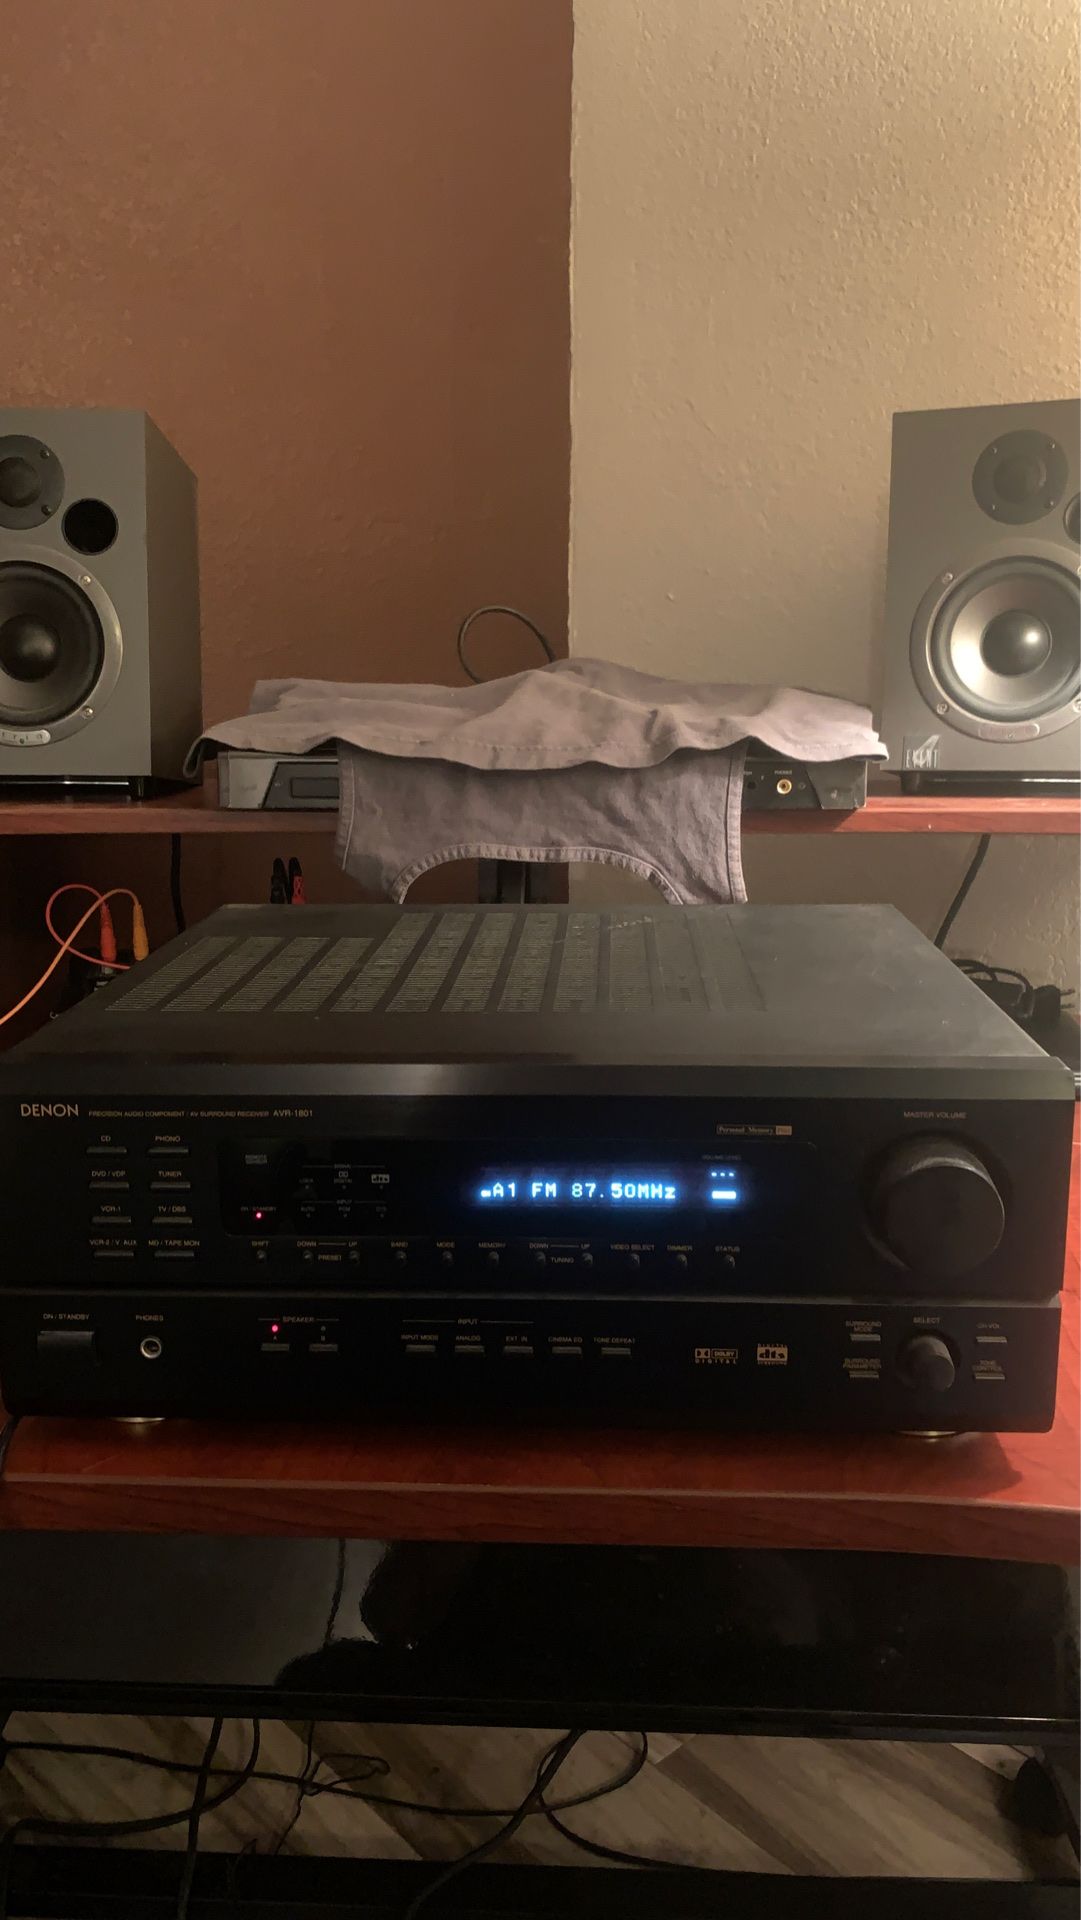 Denon AVR-1801 receiver and Mitsubishi surround sound speakers